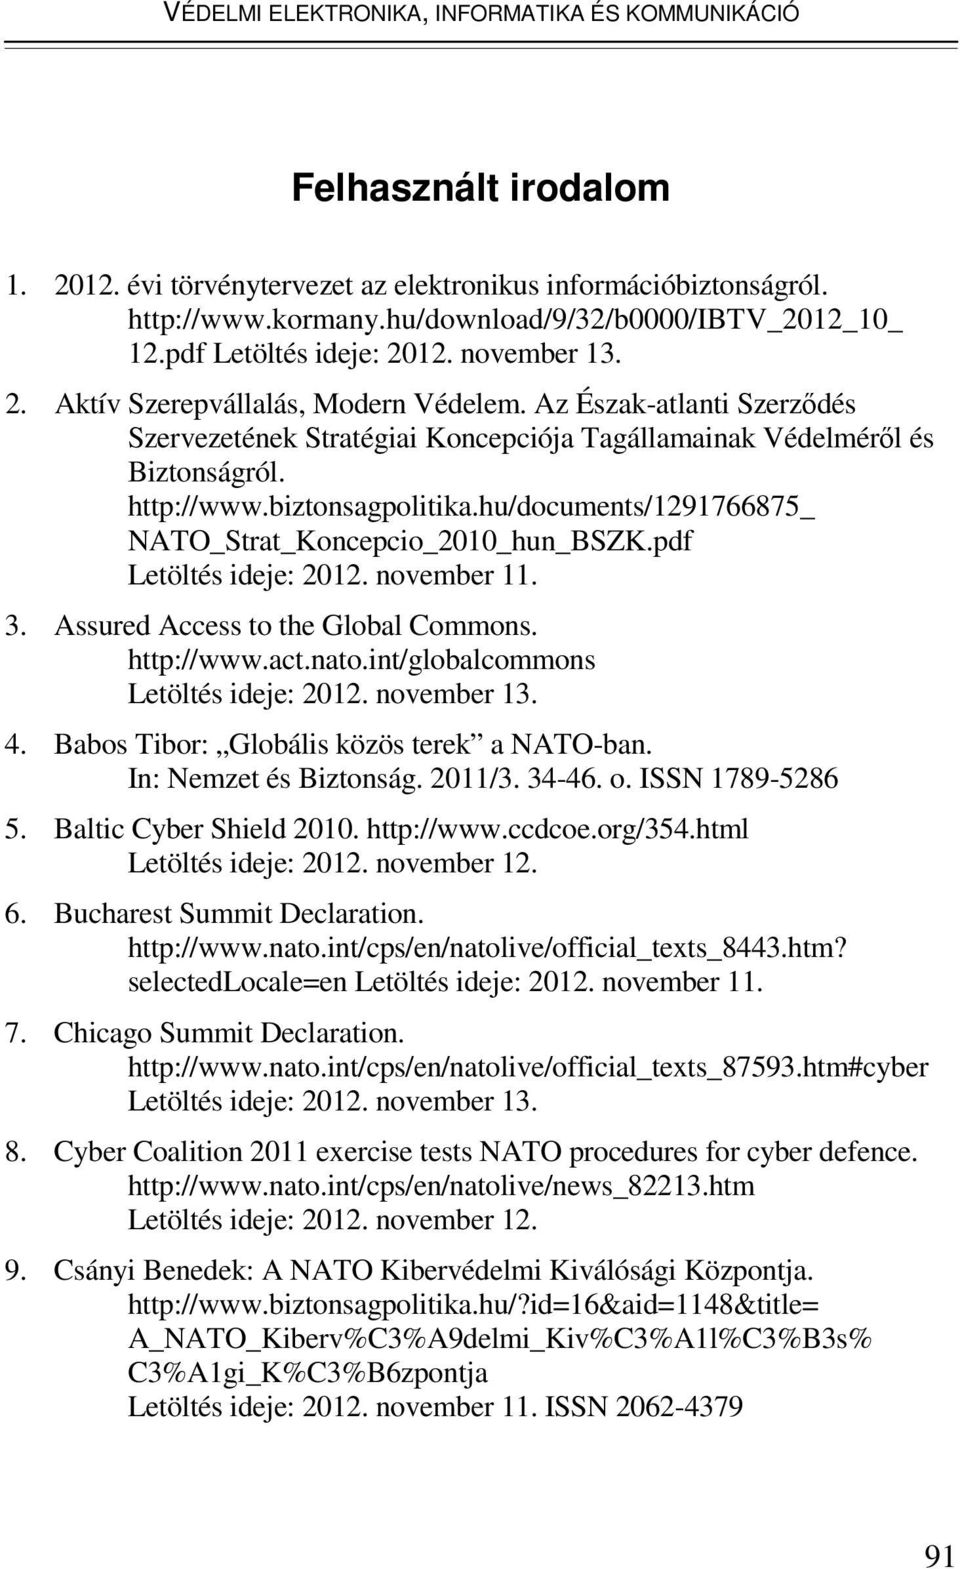 biztonsagpolitika.hu/documents/1291766875_ NATO_Strat_Koncepcio_2010_hun_BSZK.pdf Letöltés ideje: 2012. november 11. 3. Assured Access to the Global Commons. http://www.act.nato.